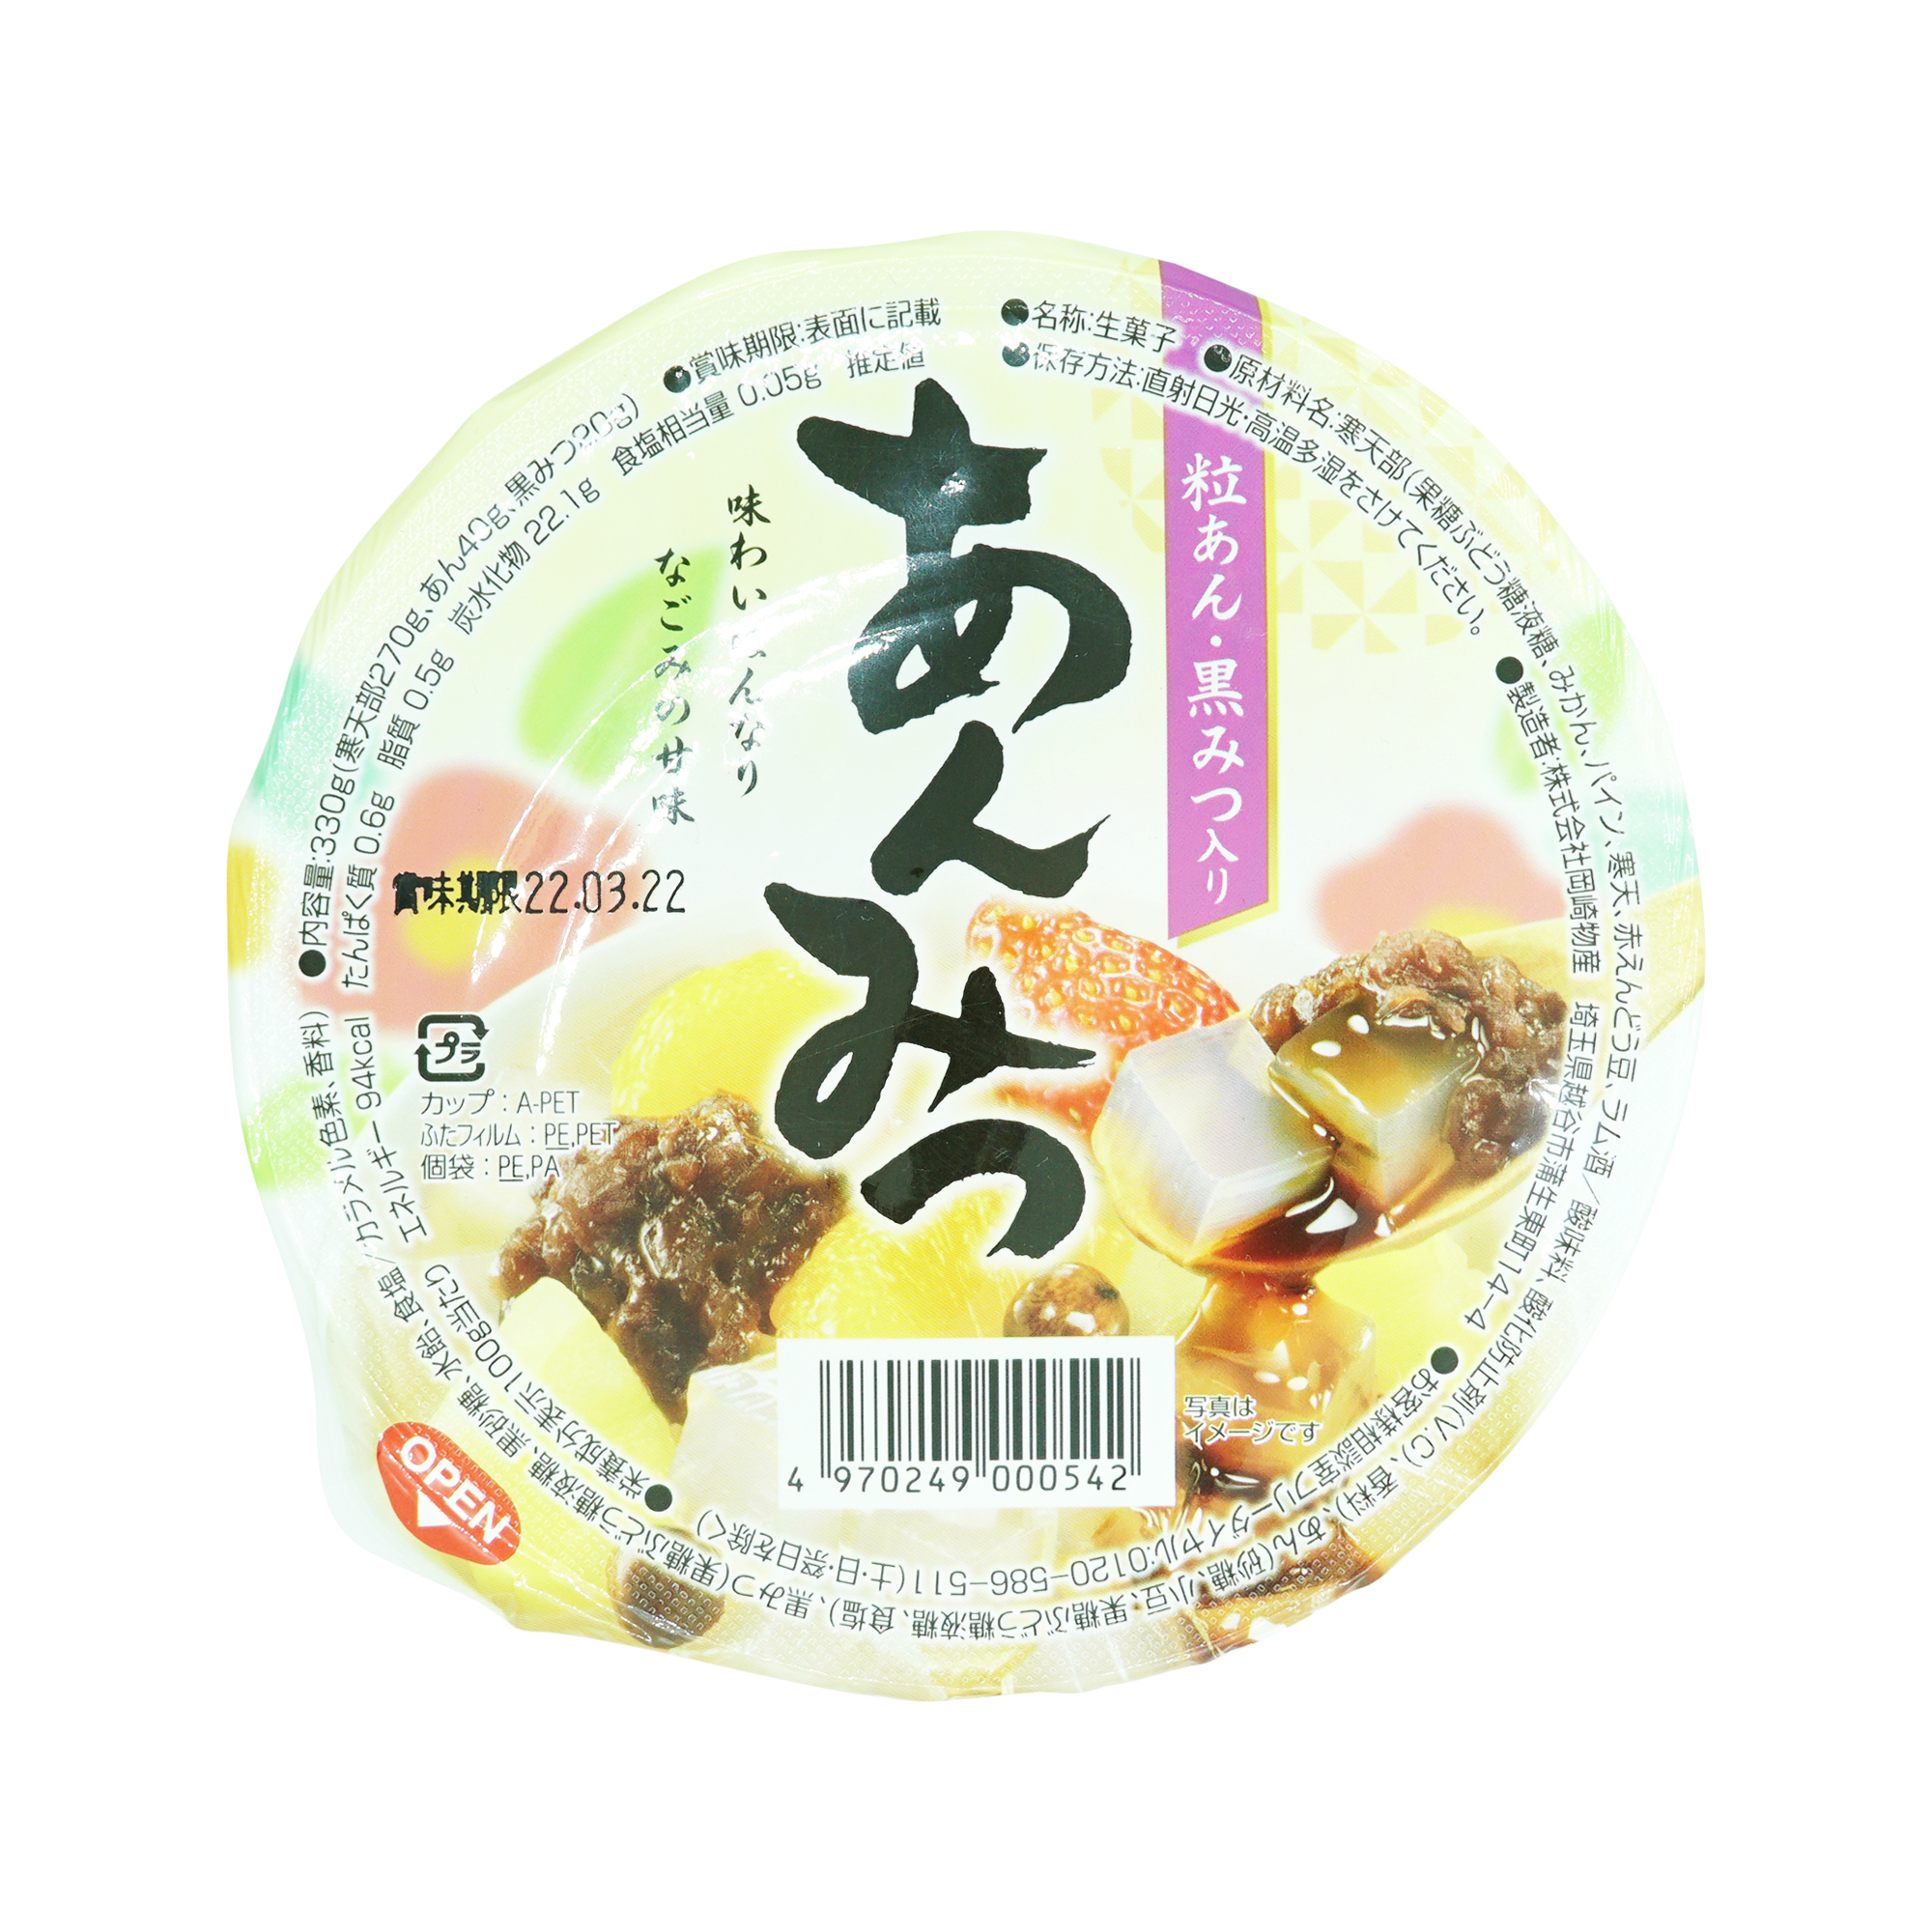 Okazaki Bussan Mixed Fruit Jelly 330g